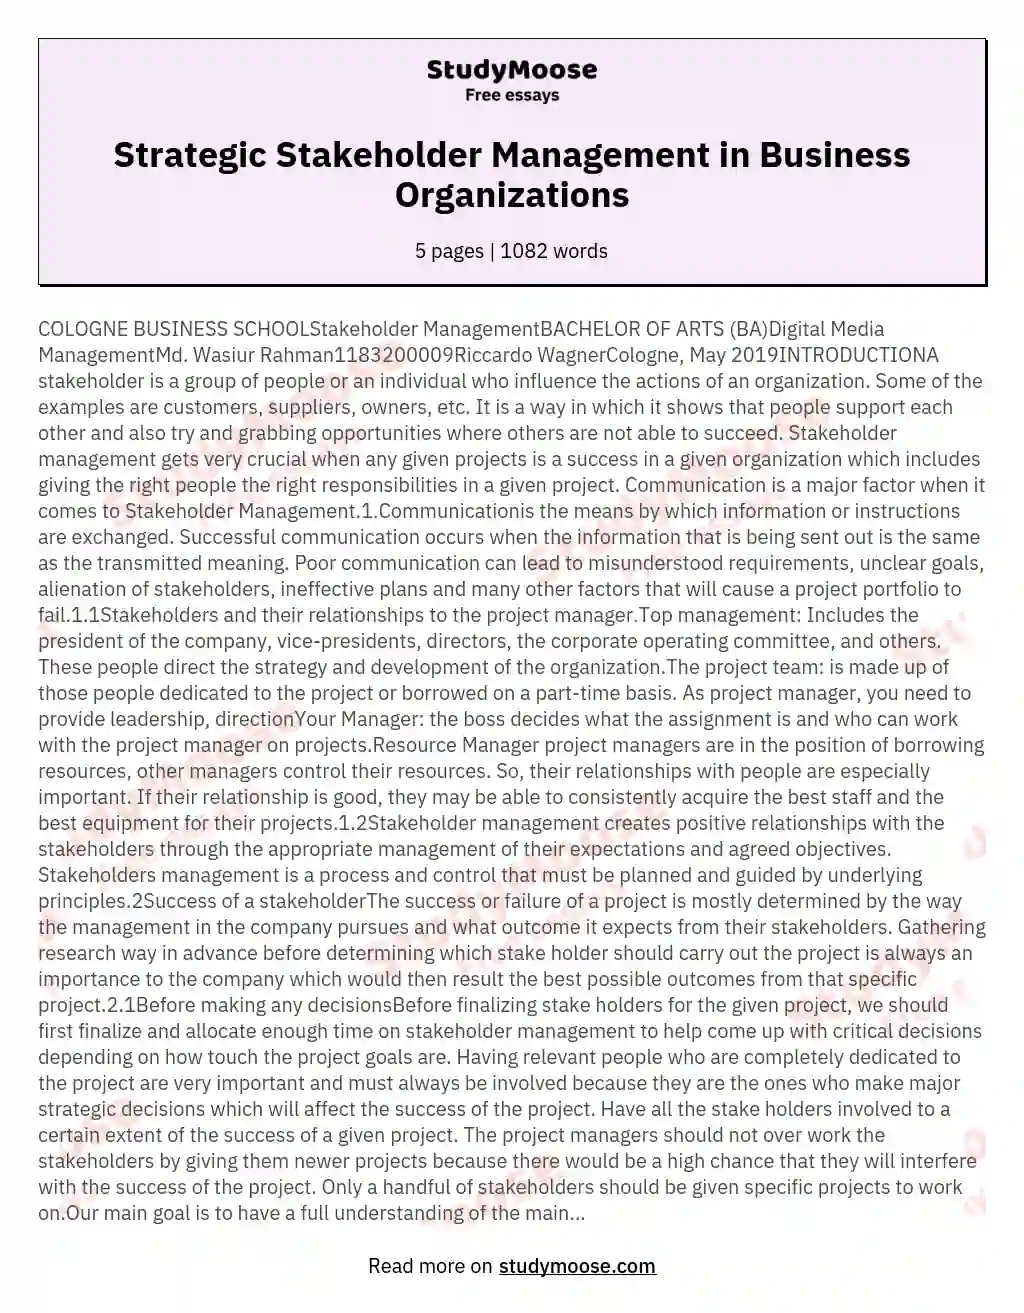 Strategic Stakeholder Management in Business Organizations essay